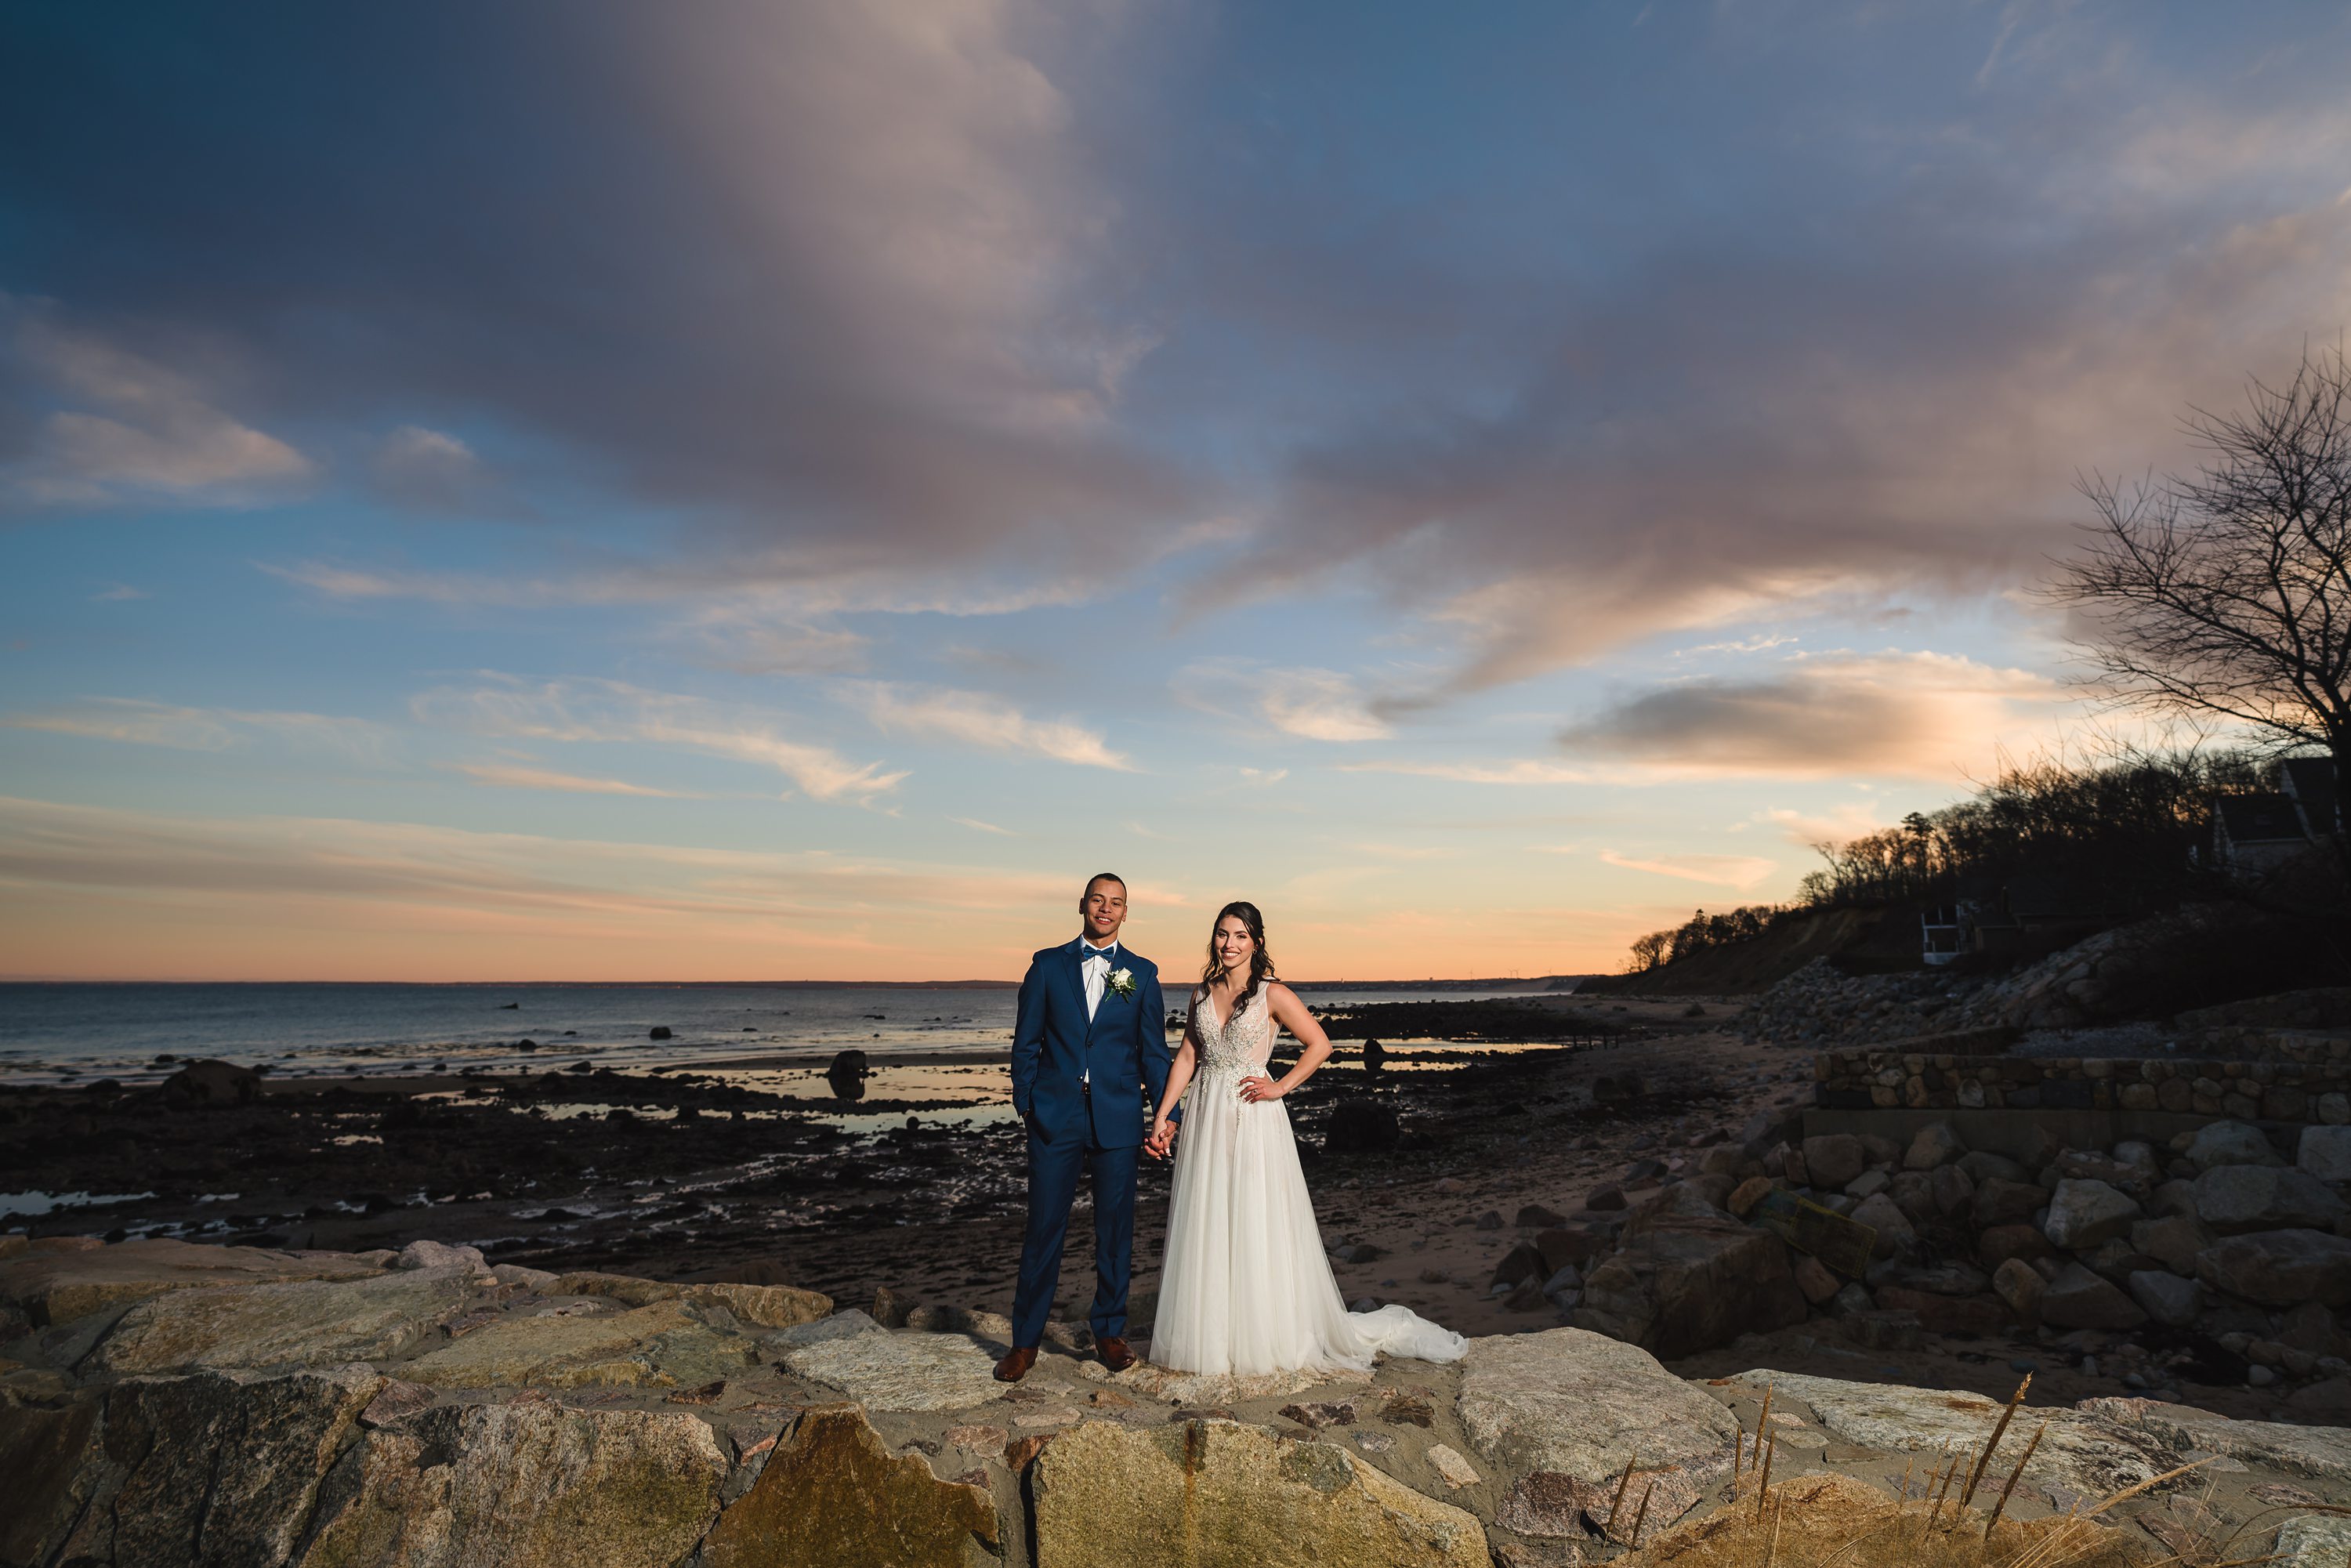 Best wedding photographer boston,new enland wedding photographer,plymouth sunset,dramatic wedding portrait